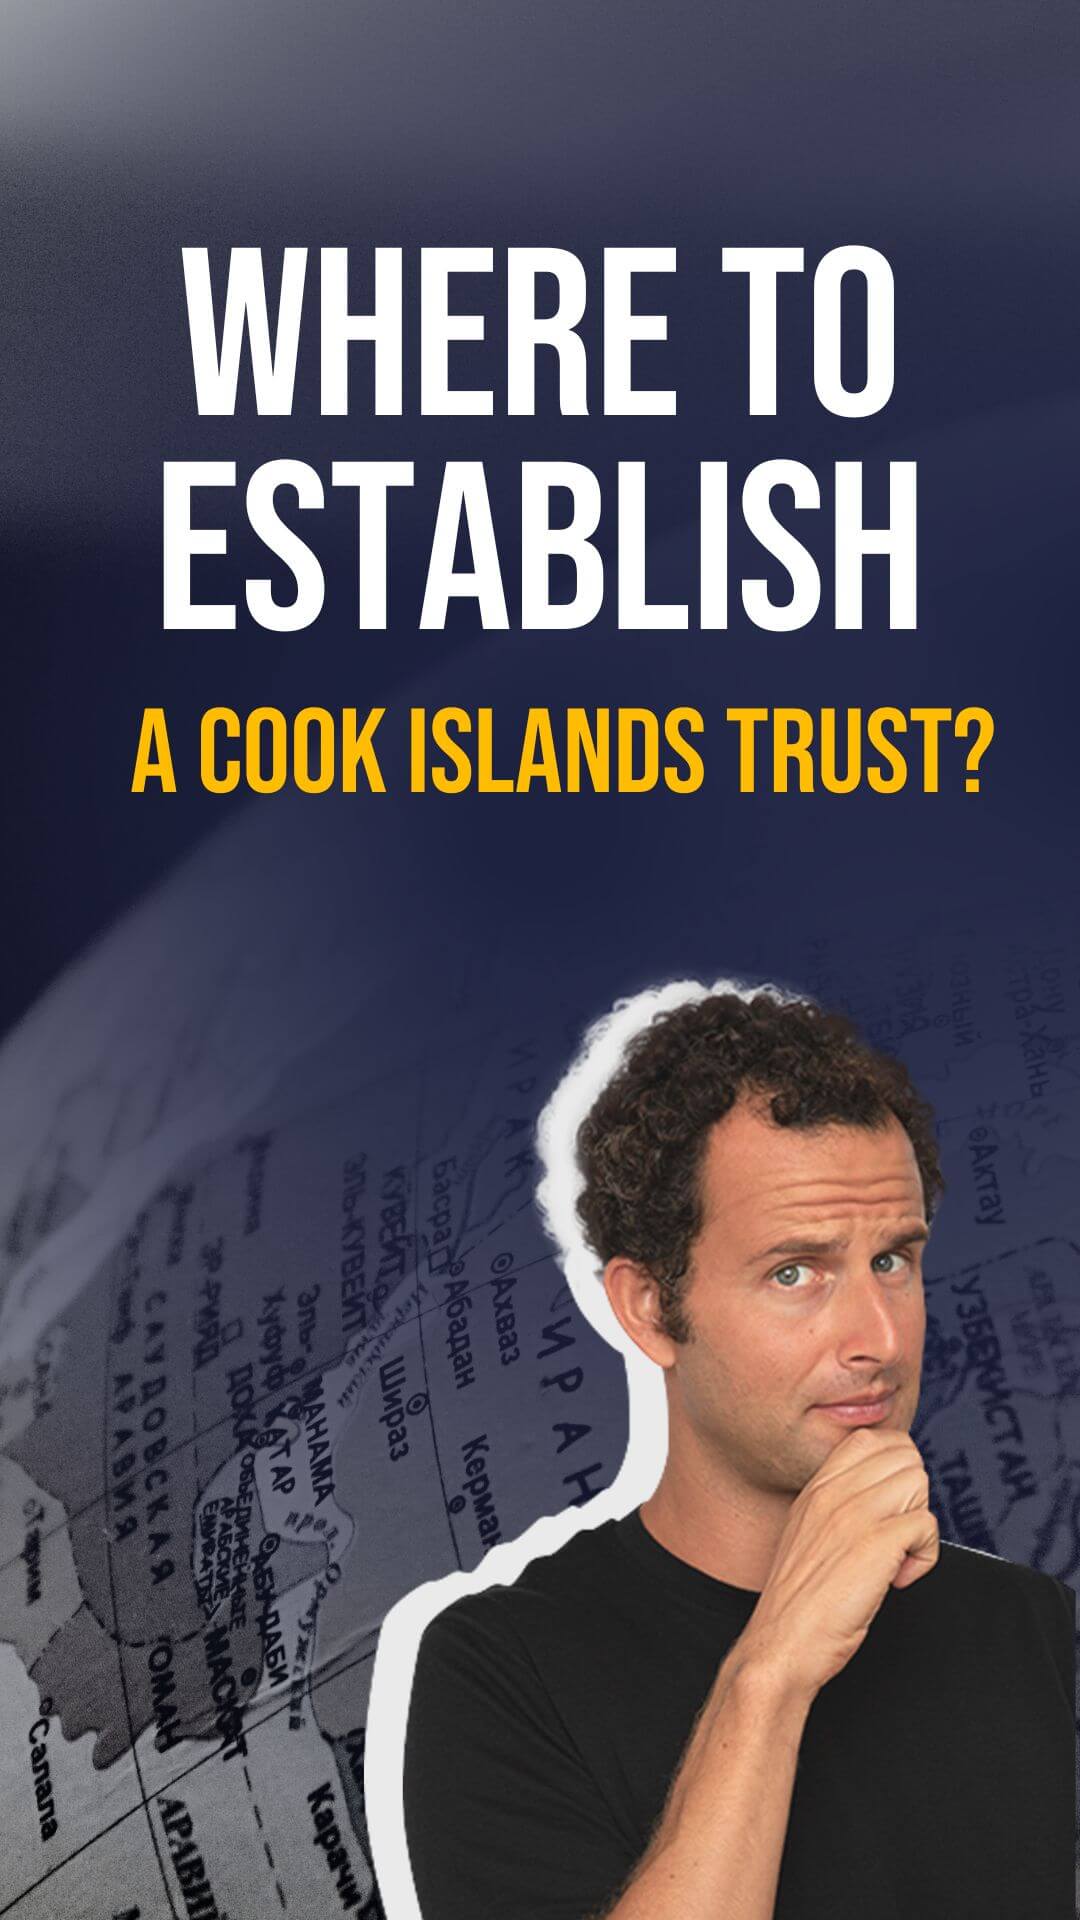 Where to establish a cook island trust